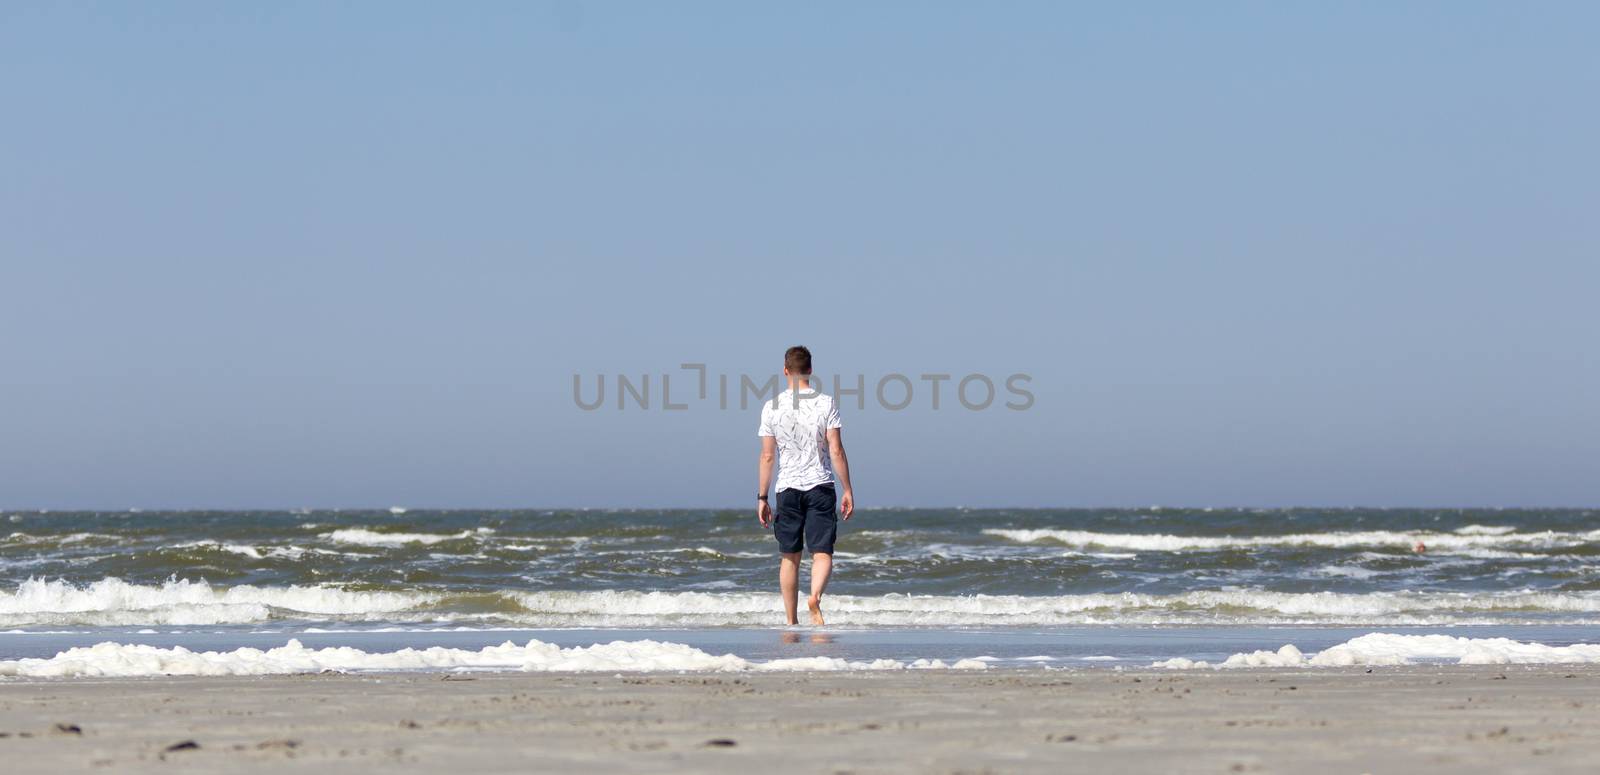 Dutch man on a beach by michaklootwijk